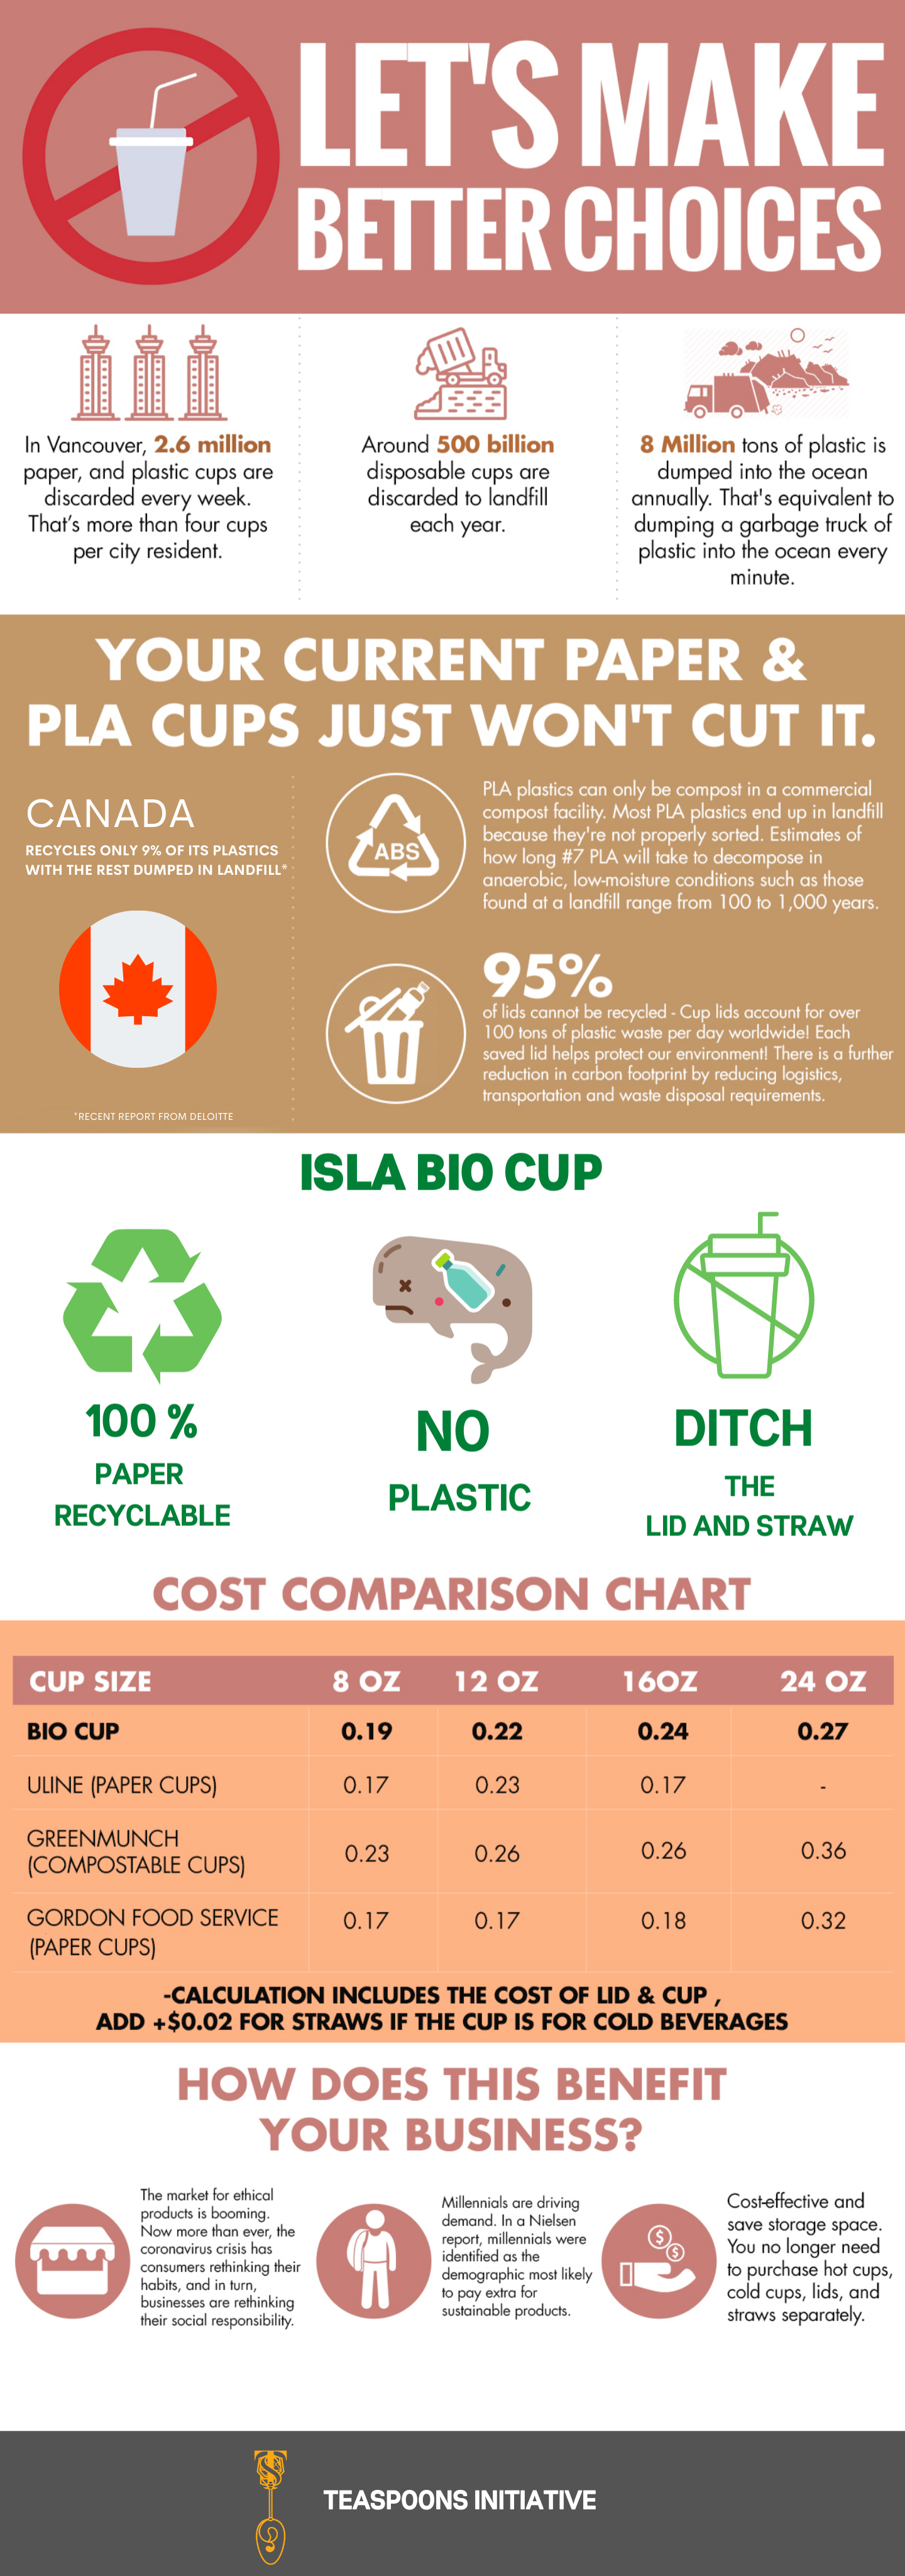 ISLA Butterfly cups 12 oz (100% recyclable)